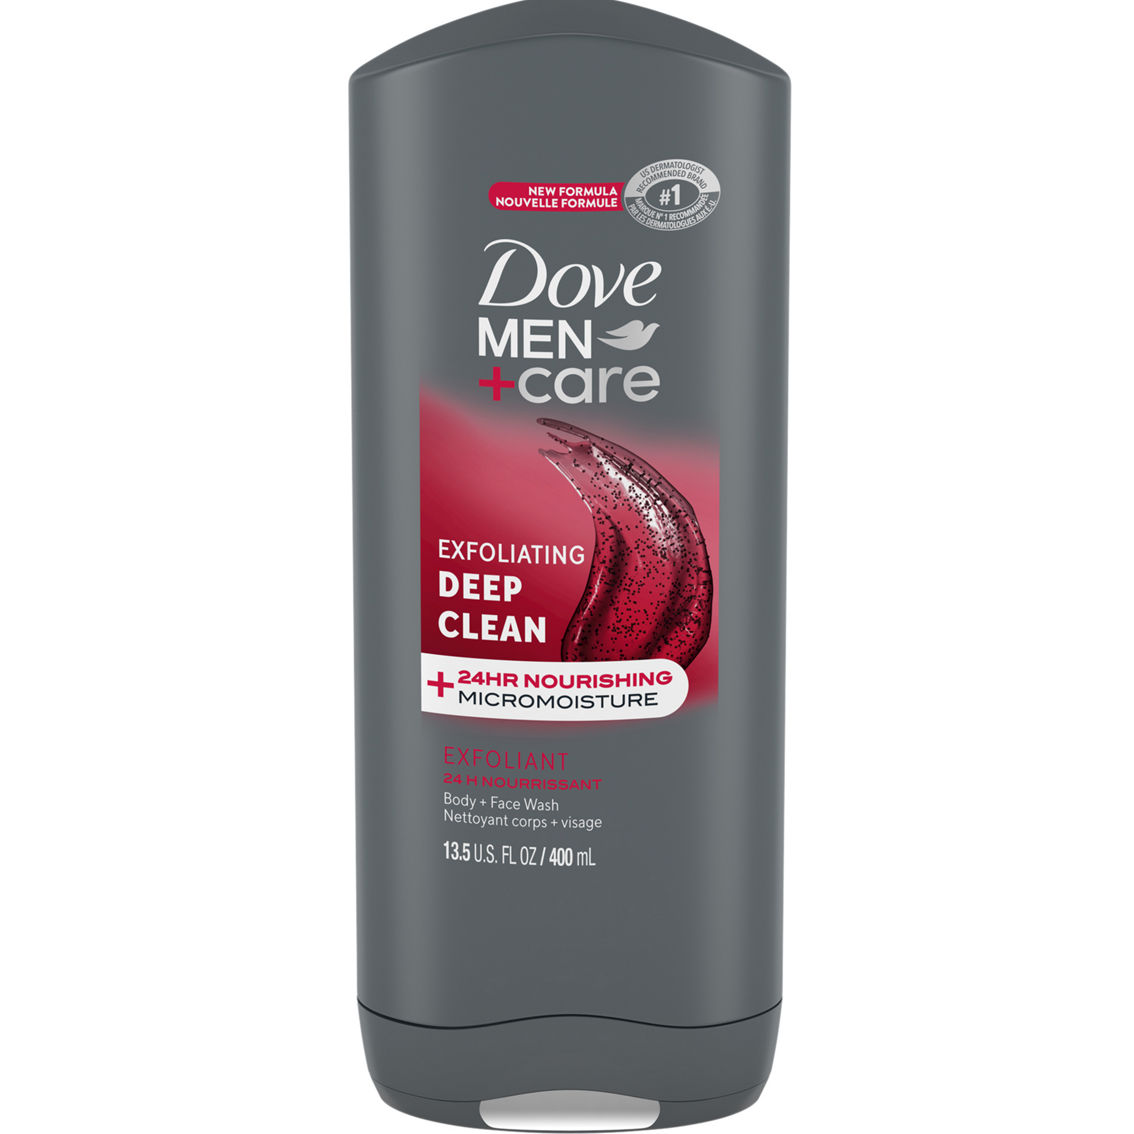 Dove Men + Care Deep Clean Body Wash 13.5 oz.